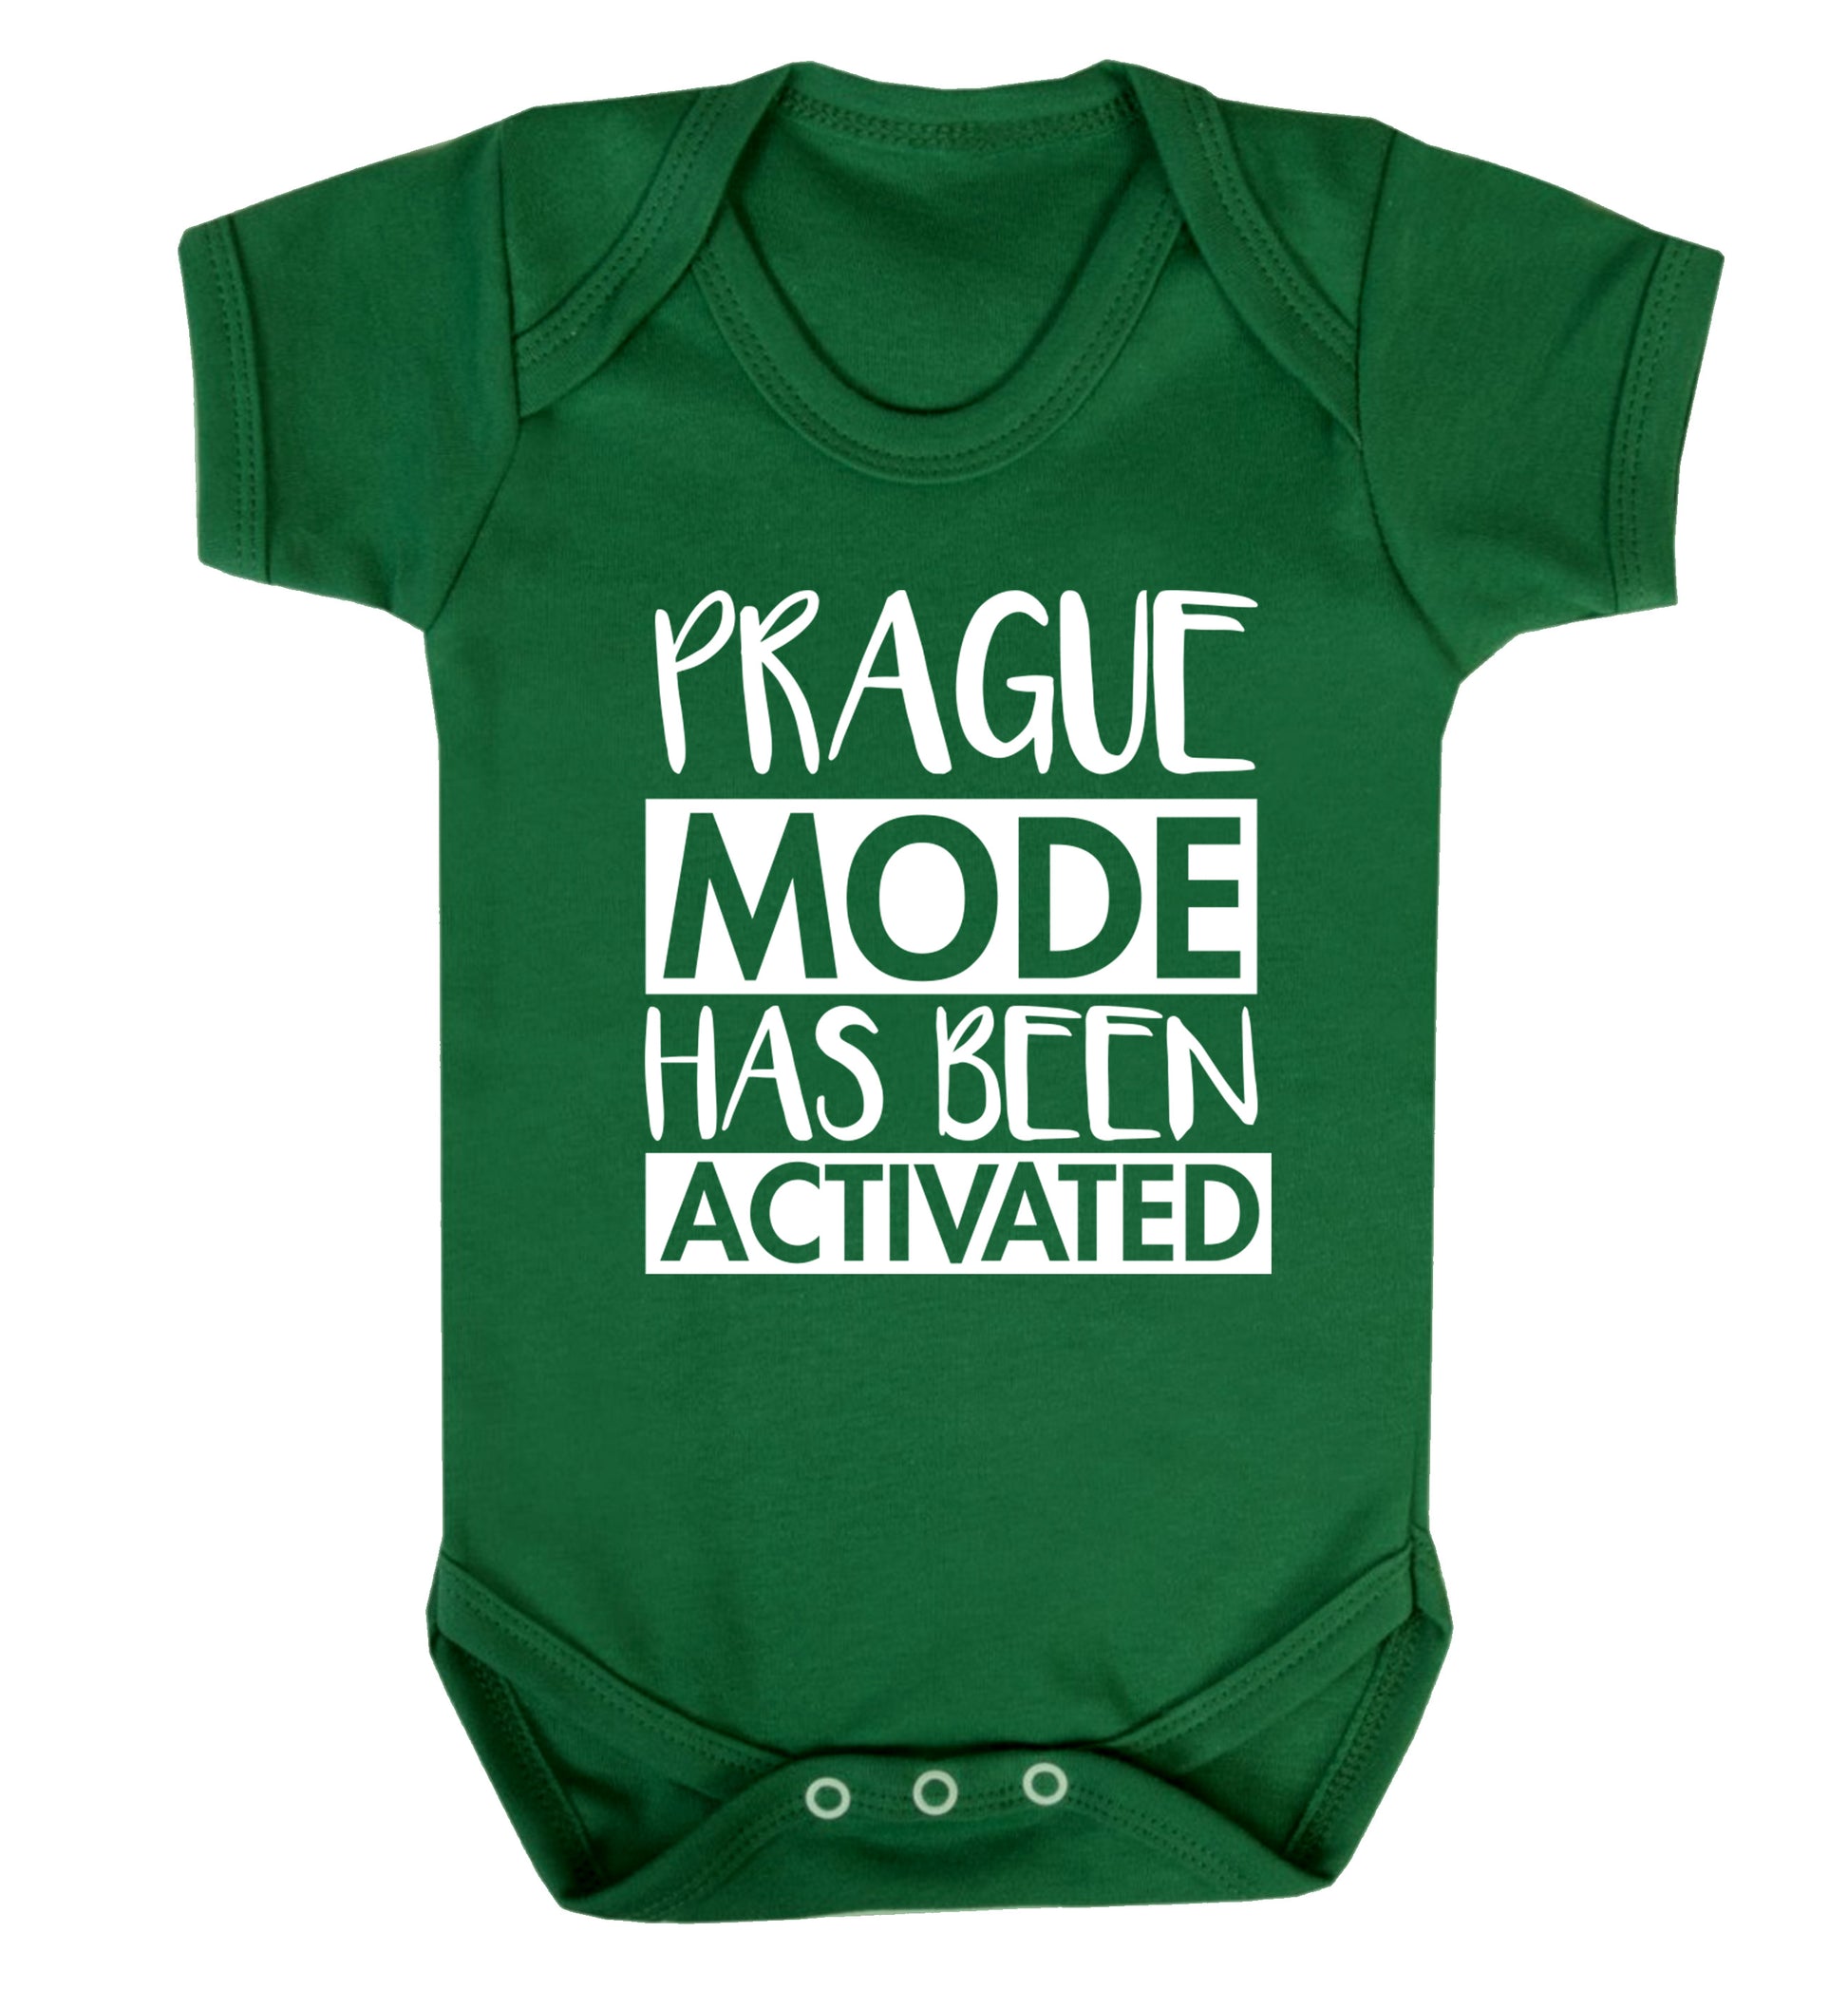 Prague mode has been activated Baby Vest green 18-24 months